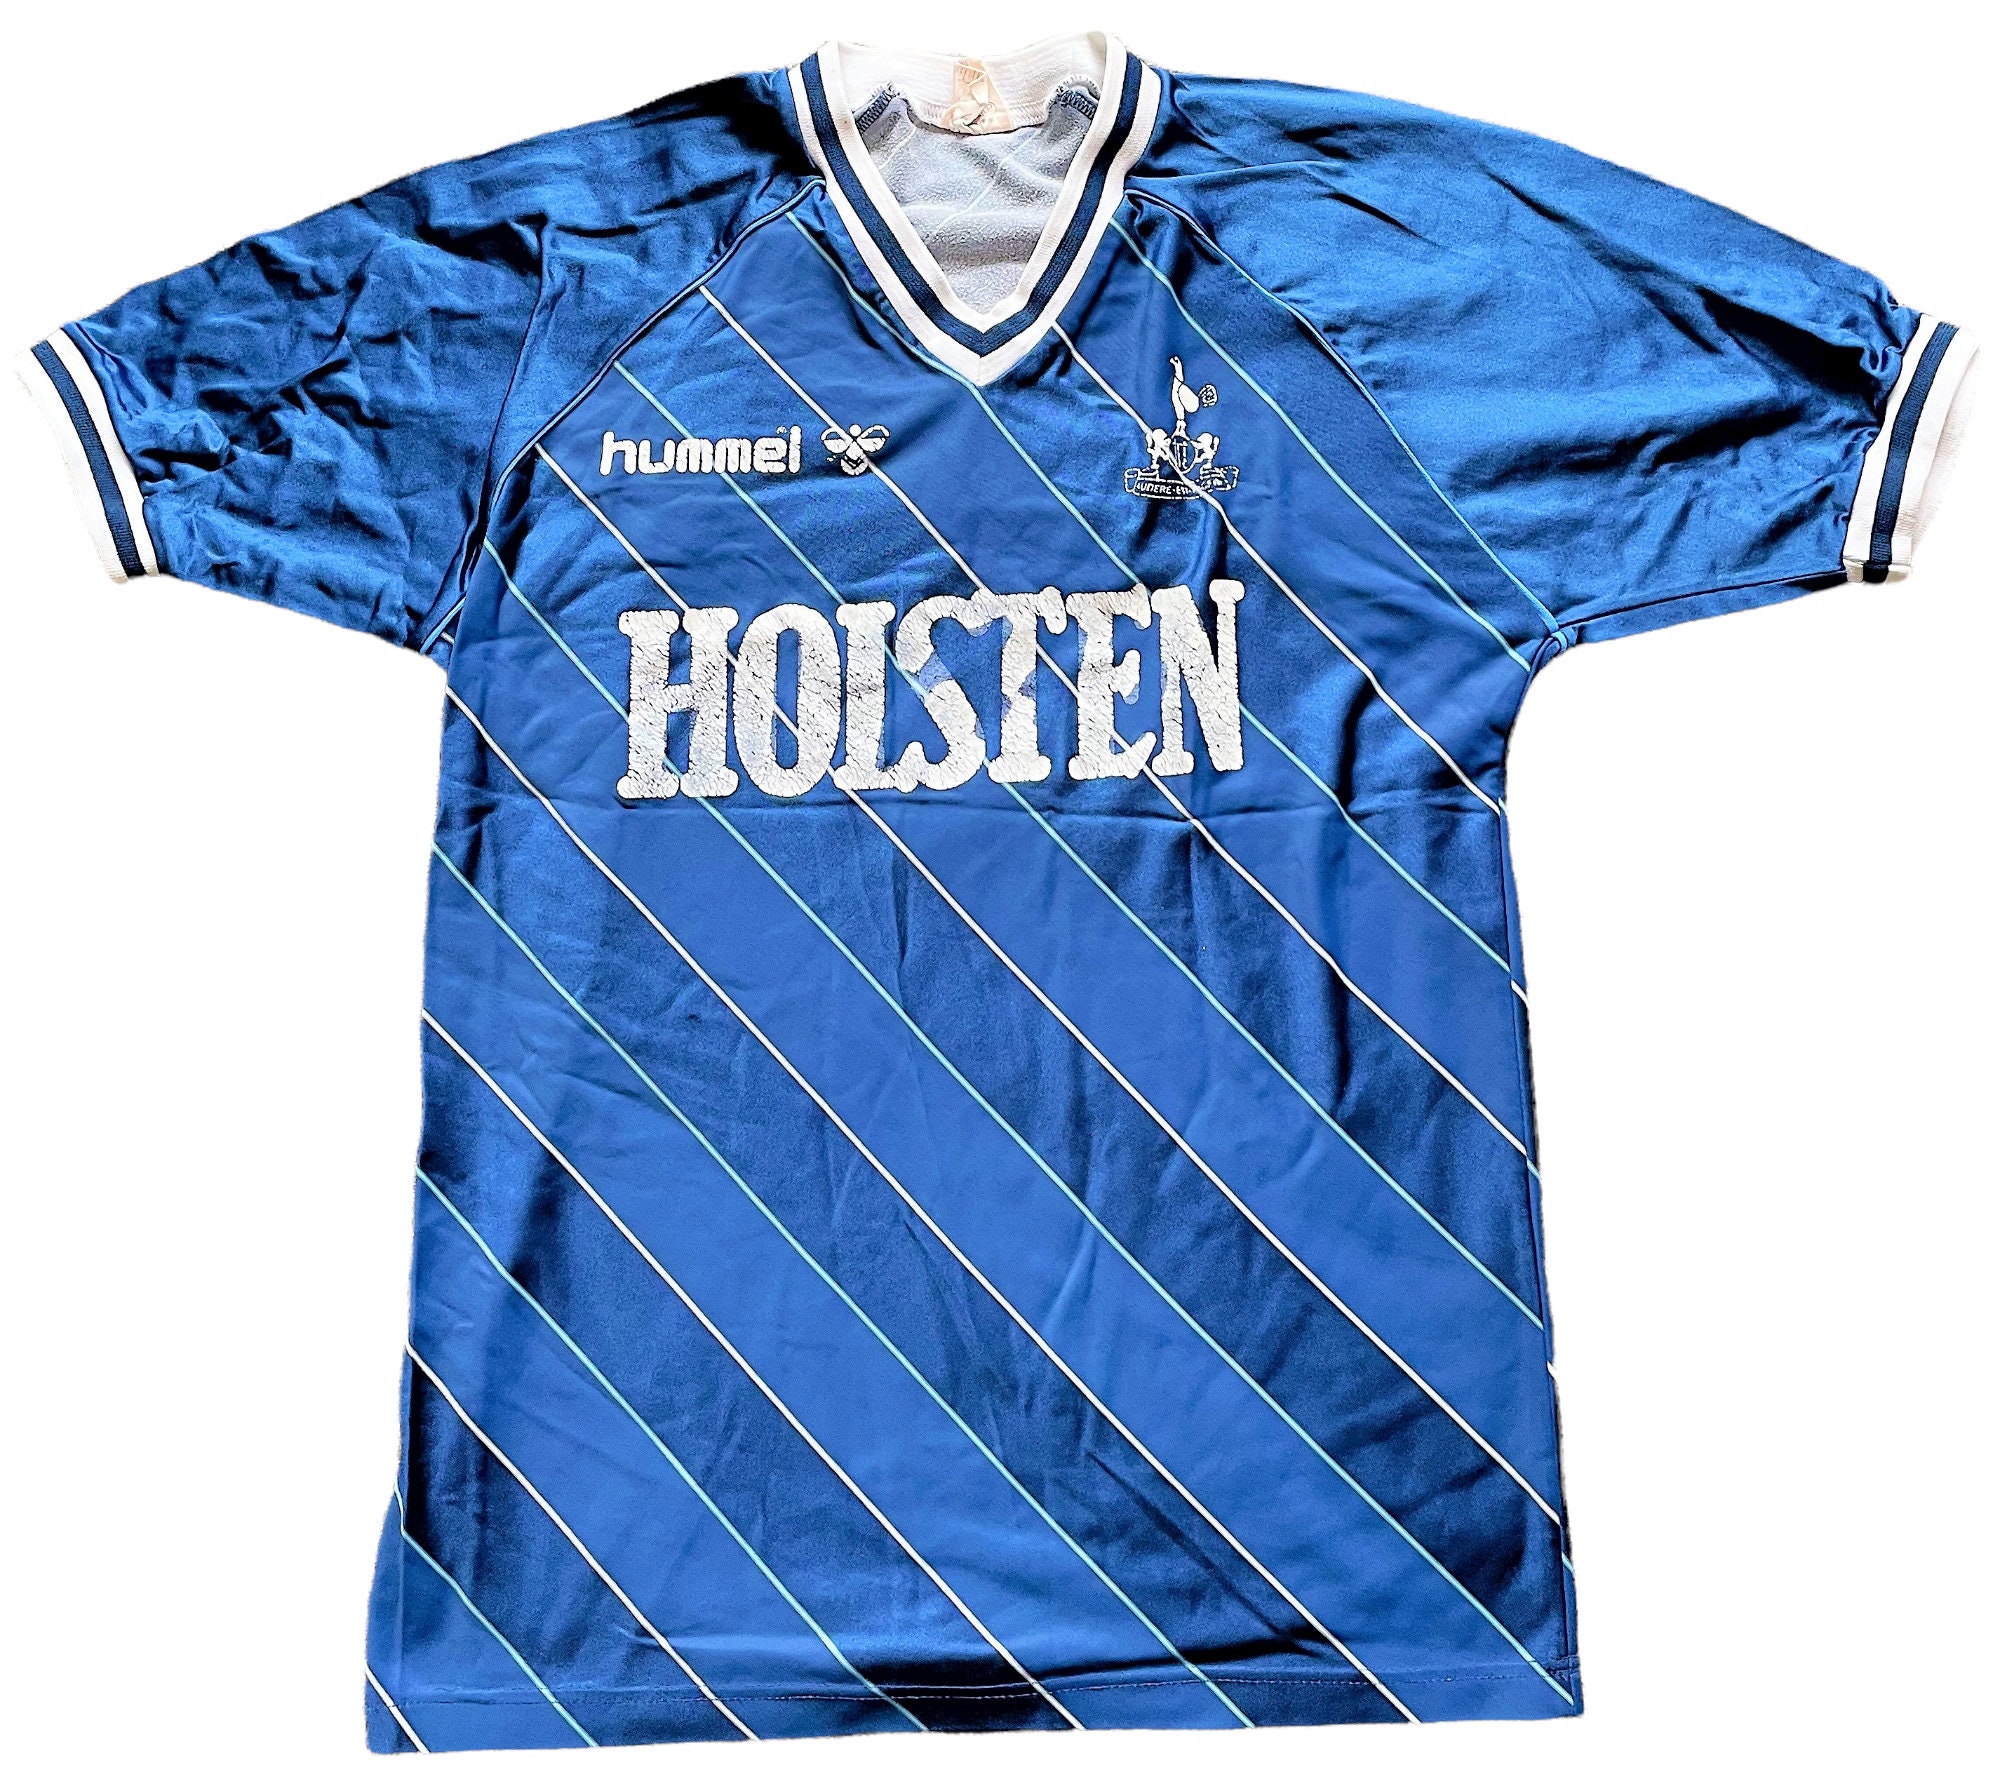 Spurs Retro 1986 Hummel Home Shirt, Size S